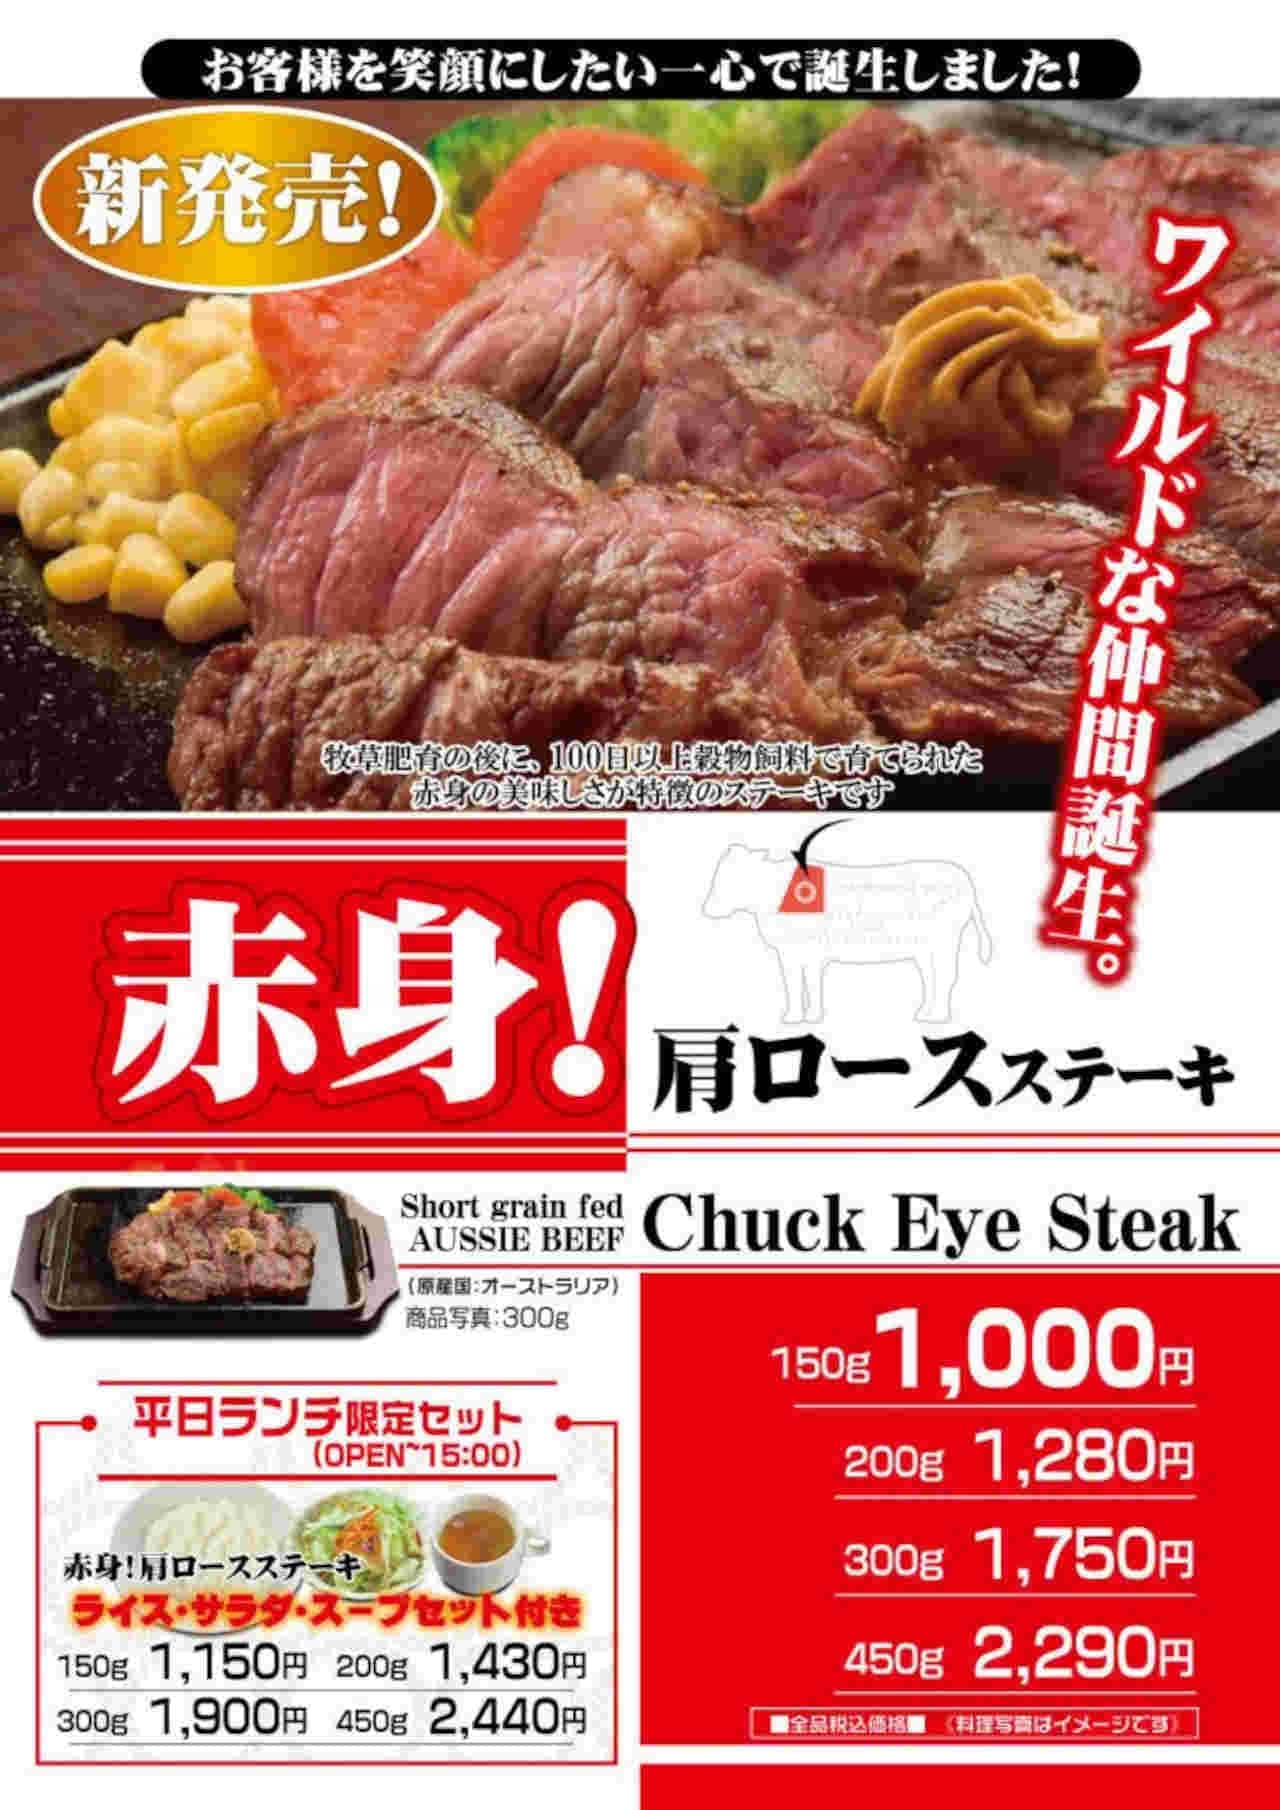 Ikinari! STEAK "Red Meat! Shoulder Roast Steak Fair".